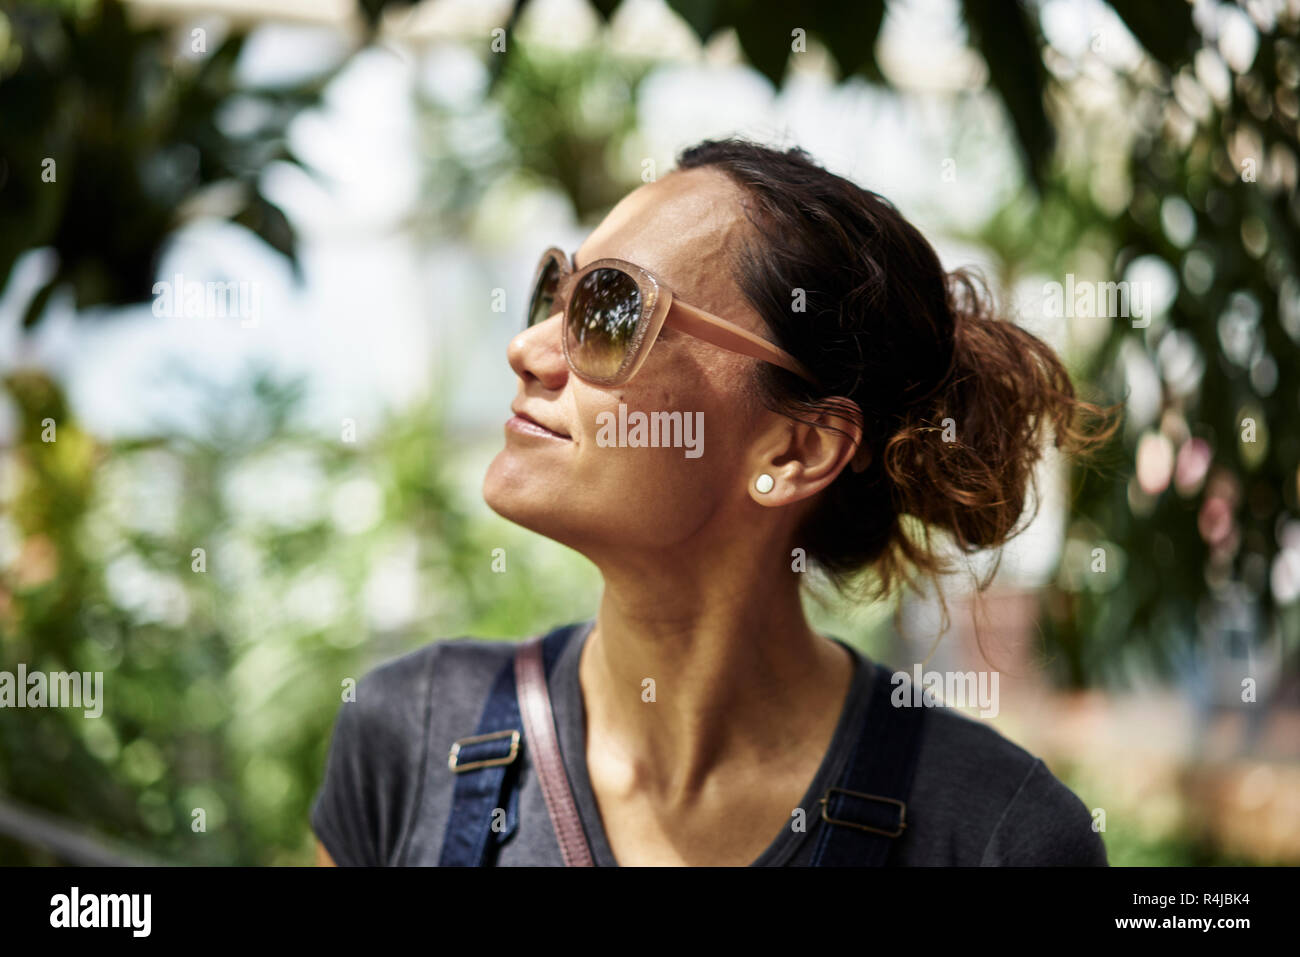 Woman wearing sunglasses in Brooklyn, New York Stock Photo